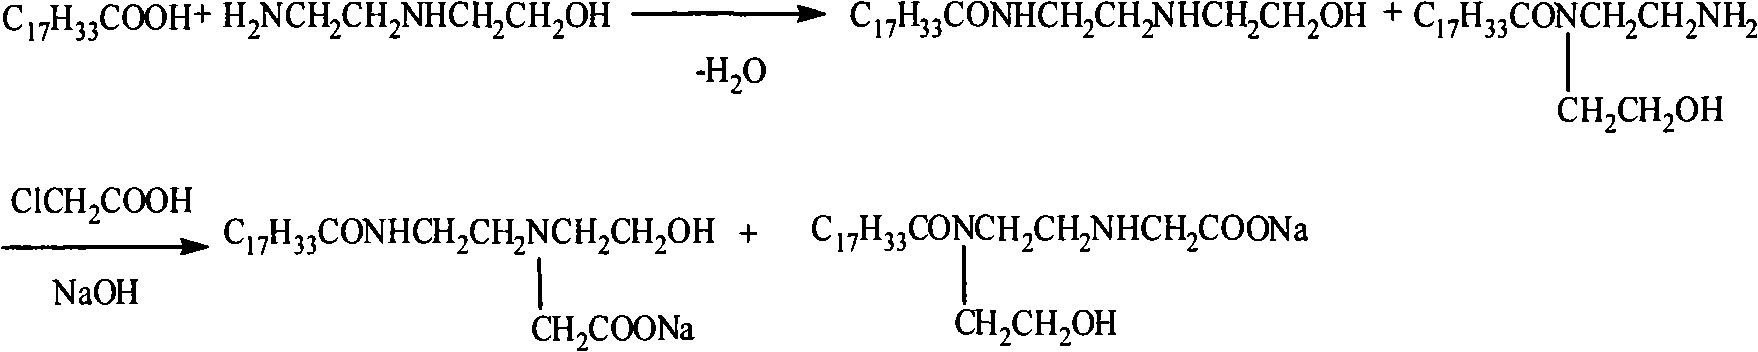 Oleic acid acidamide surfactant and synthetic method